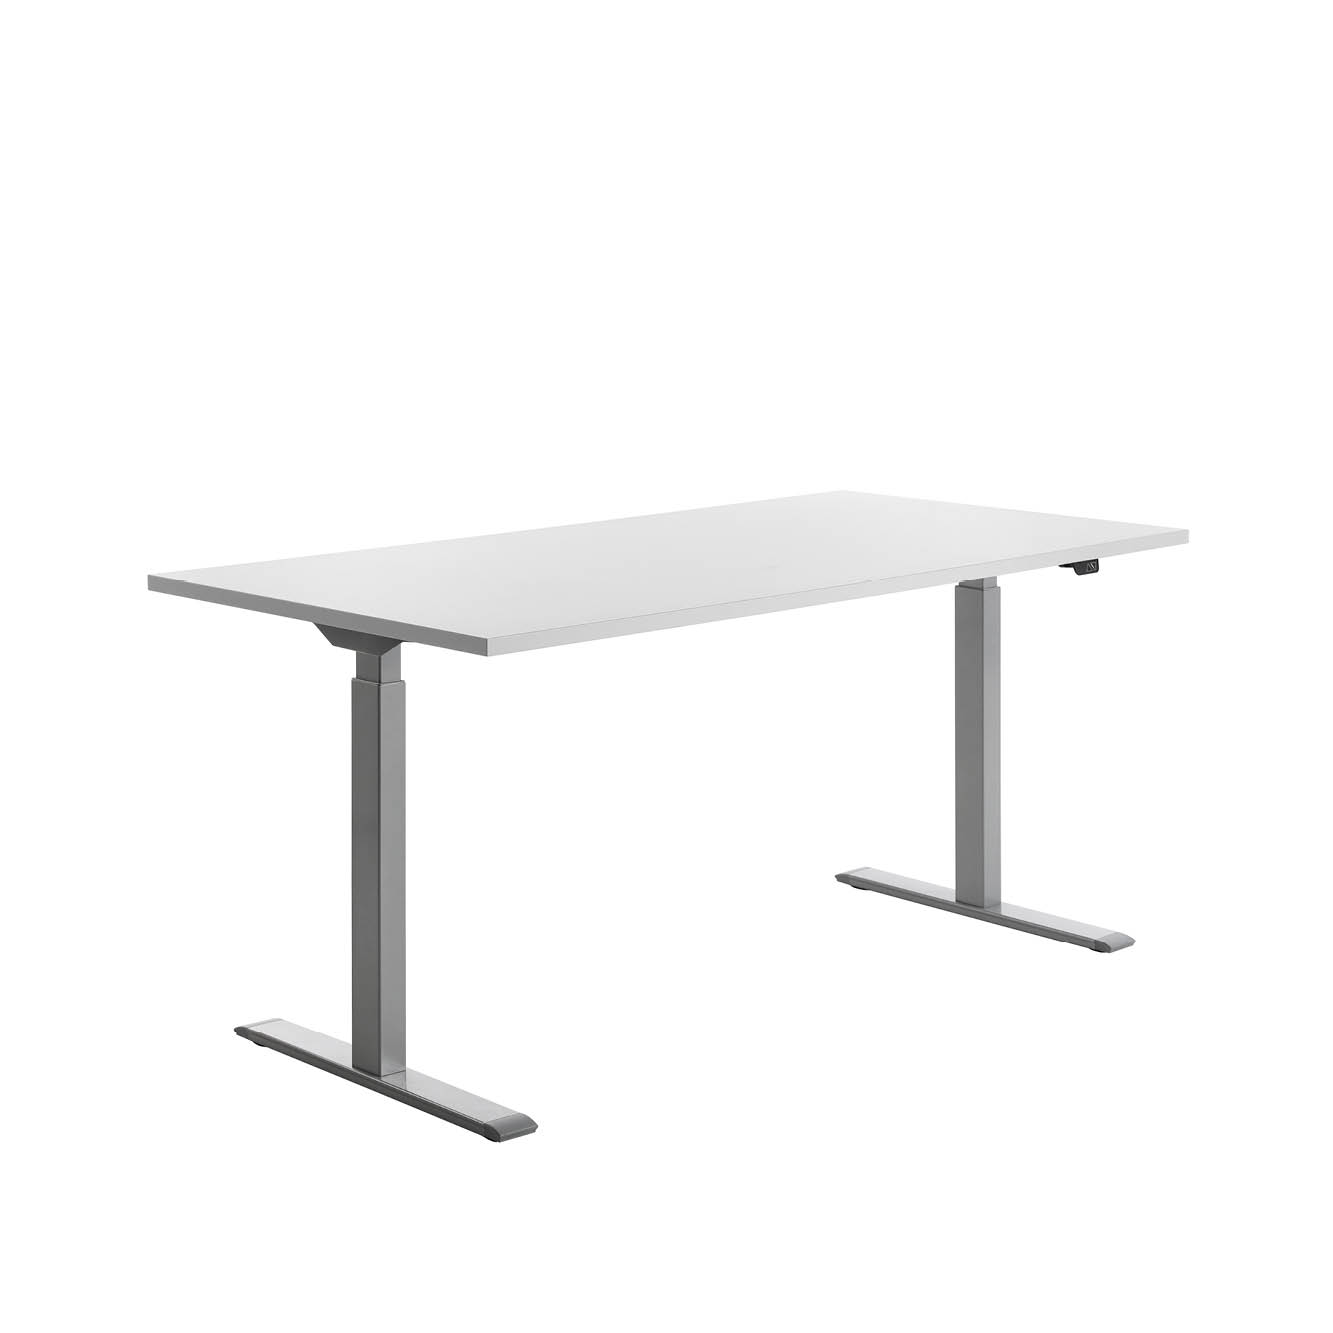 160 x 80 cm Schreibtisch Topstar Ergo E-Table höhenverstellbar - grau, weiss